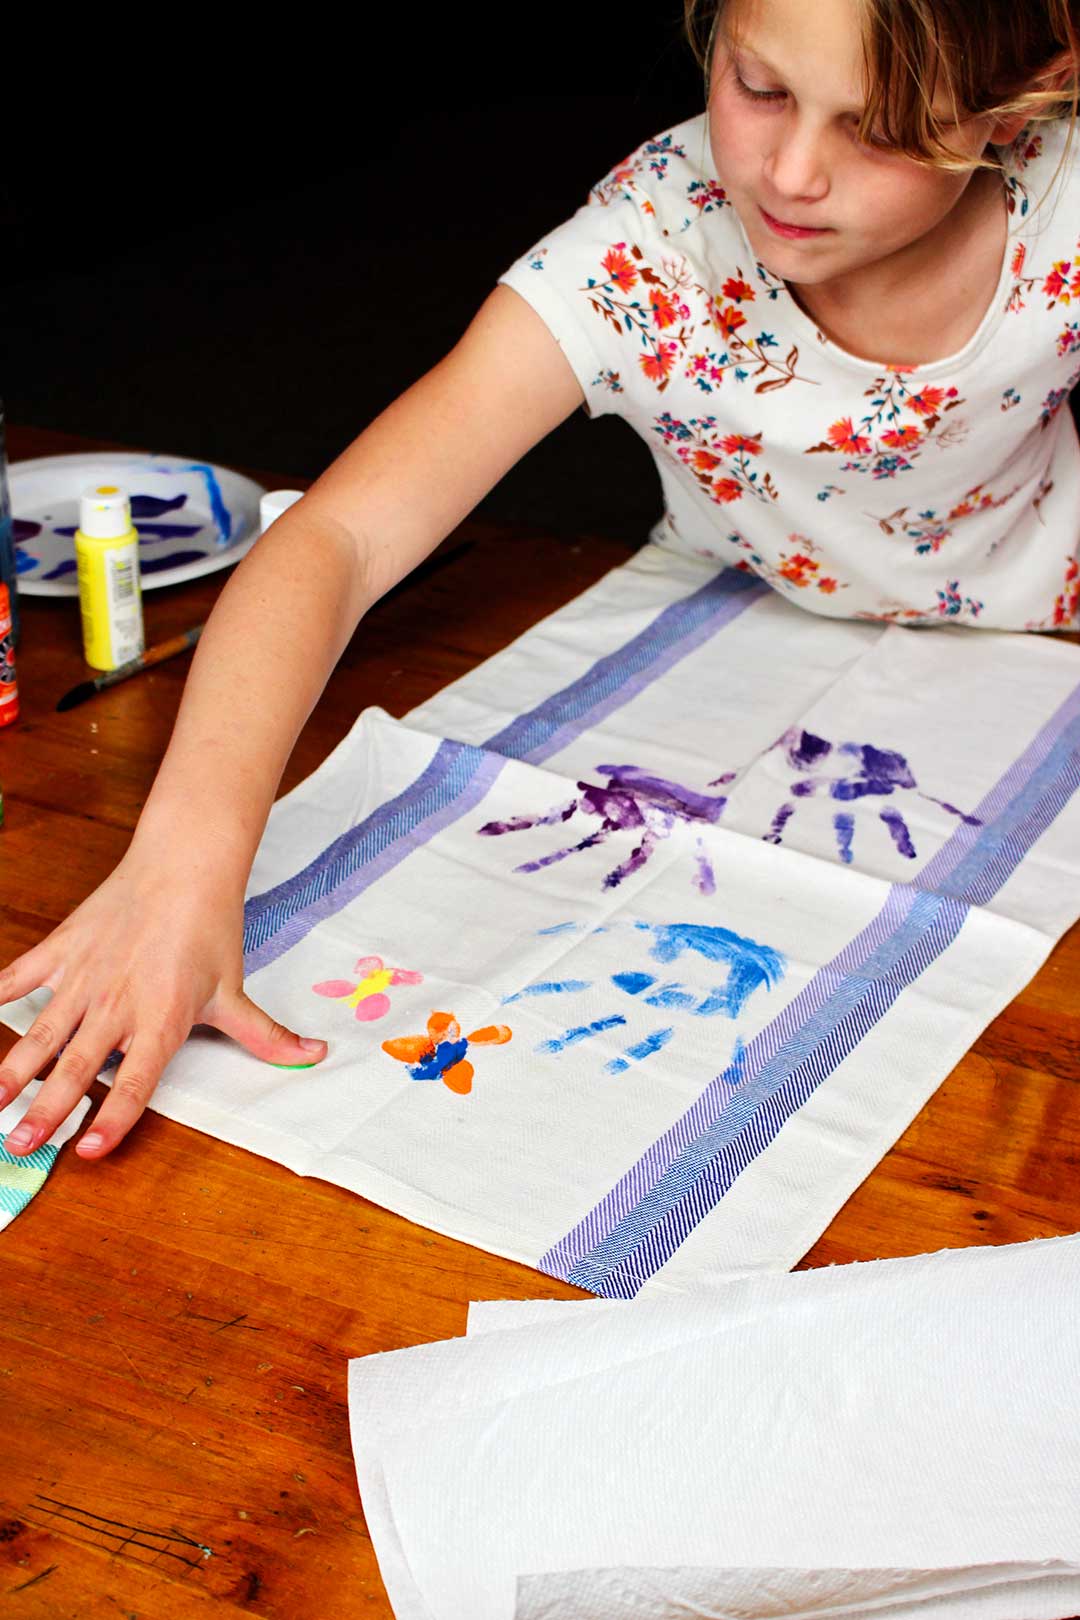 https://welcometonanas.com/wp-content/uploads/2021/04/Welcome-to-Nanas-Handprint-Flower-Dish-Towel-Mothers-Day-Gift-DIY-Kids-Paint-Craft-Project-10.jpg